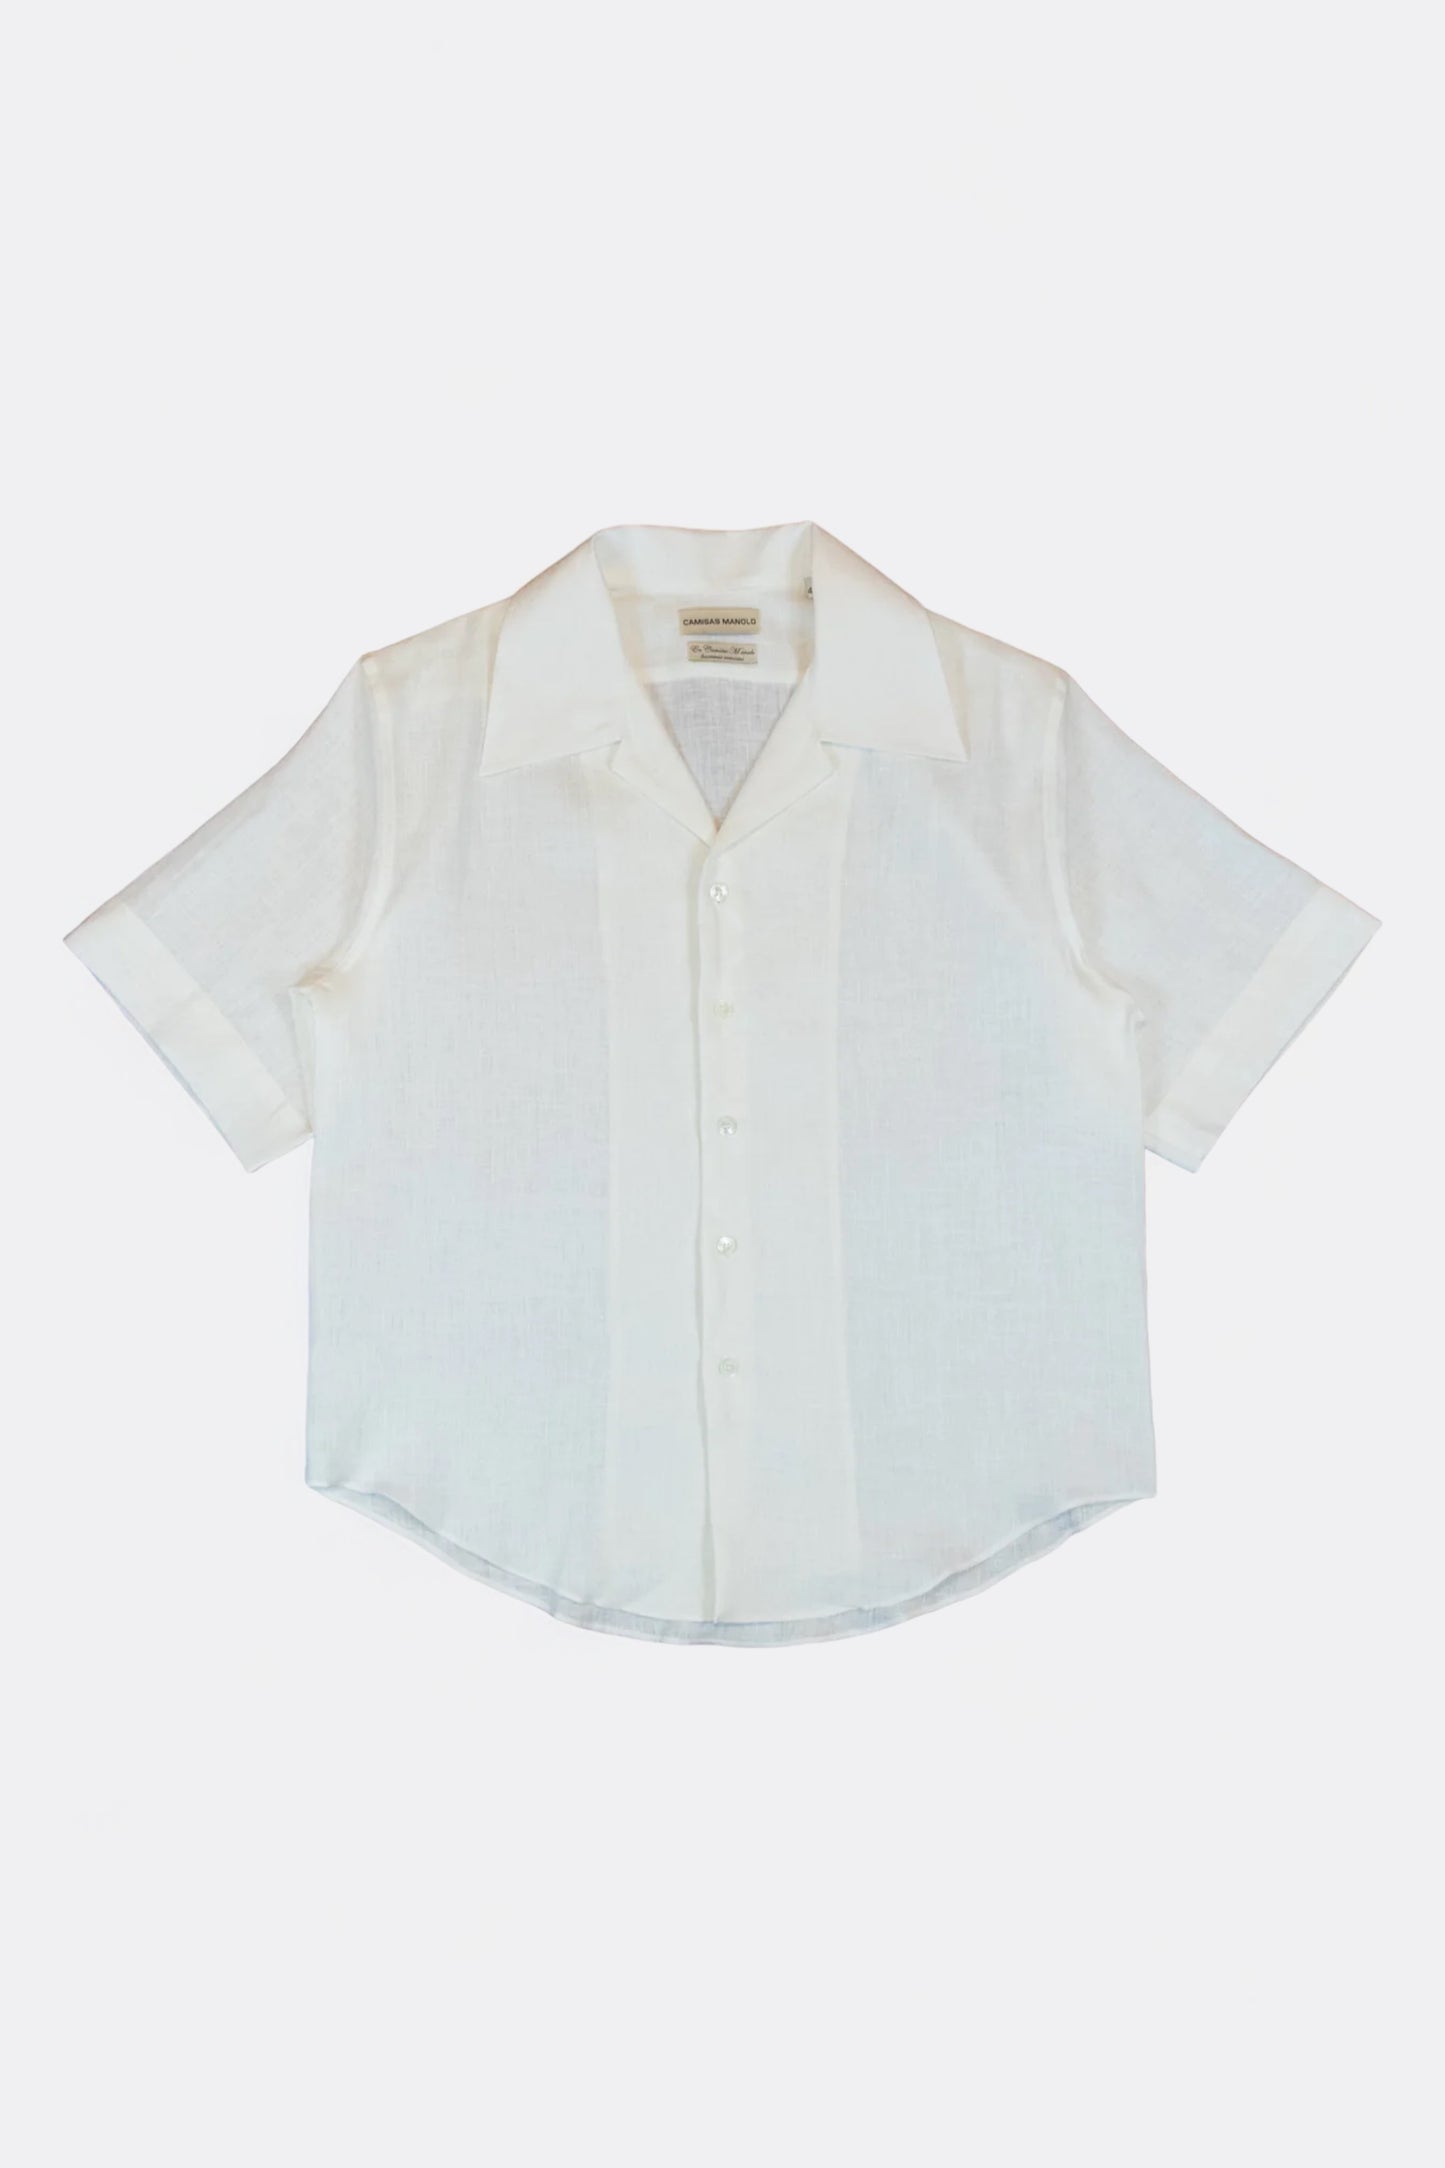 Camisas Manolo - School Shirt (Off White Linen)